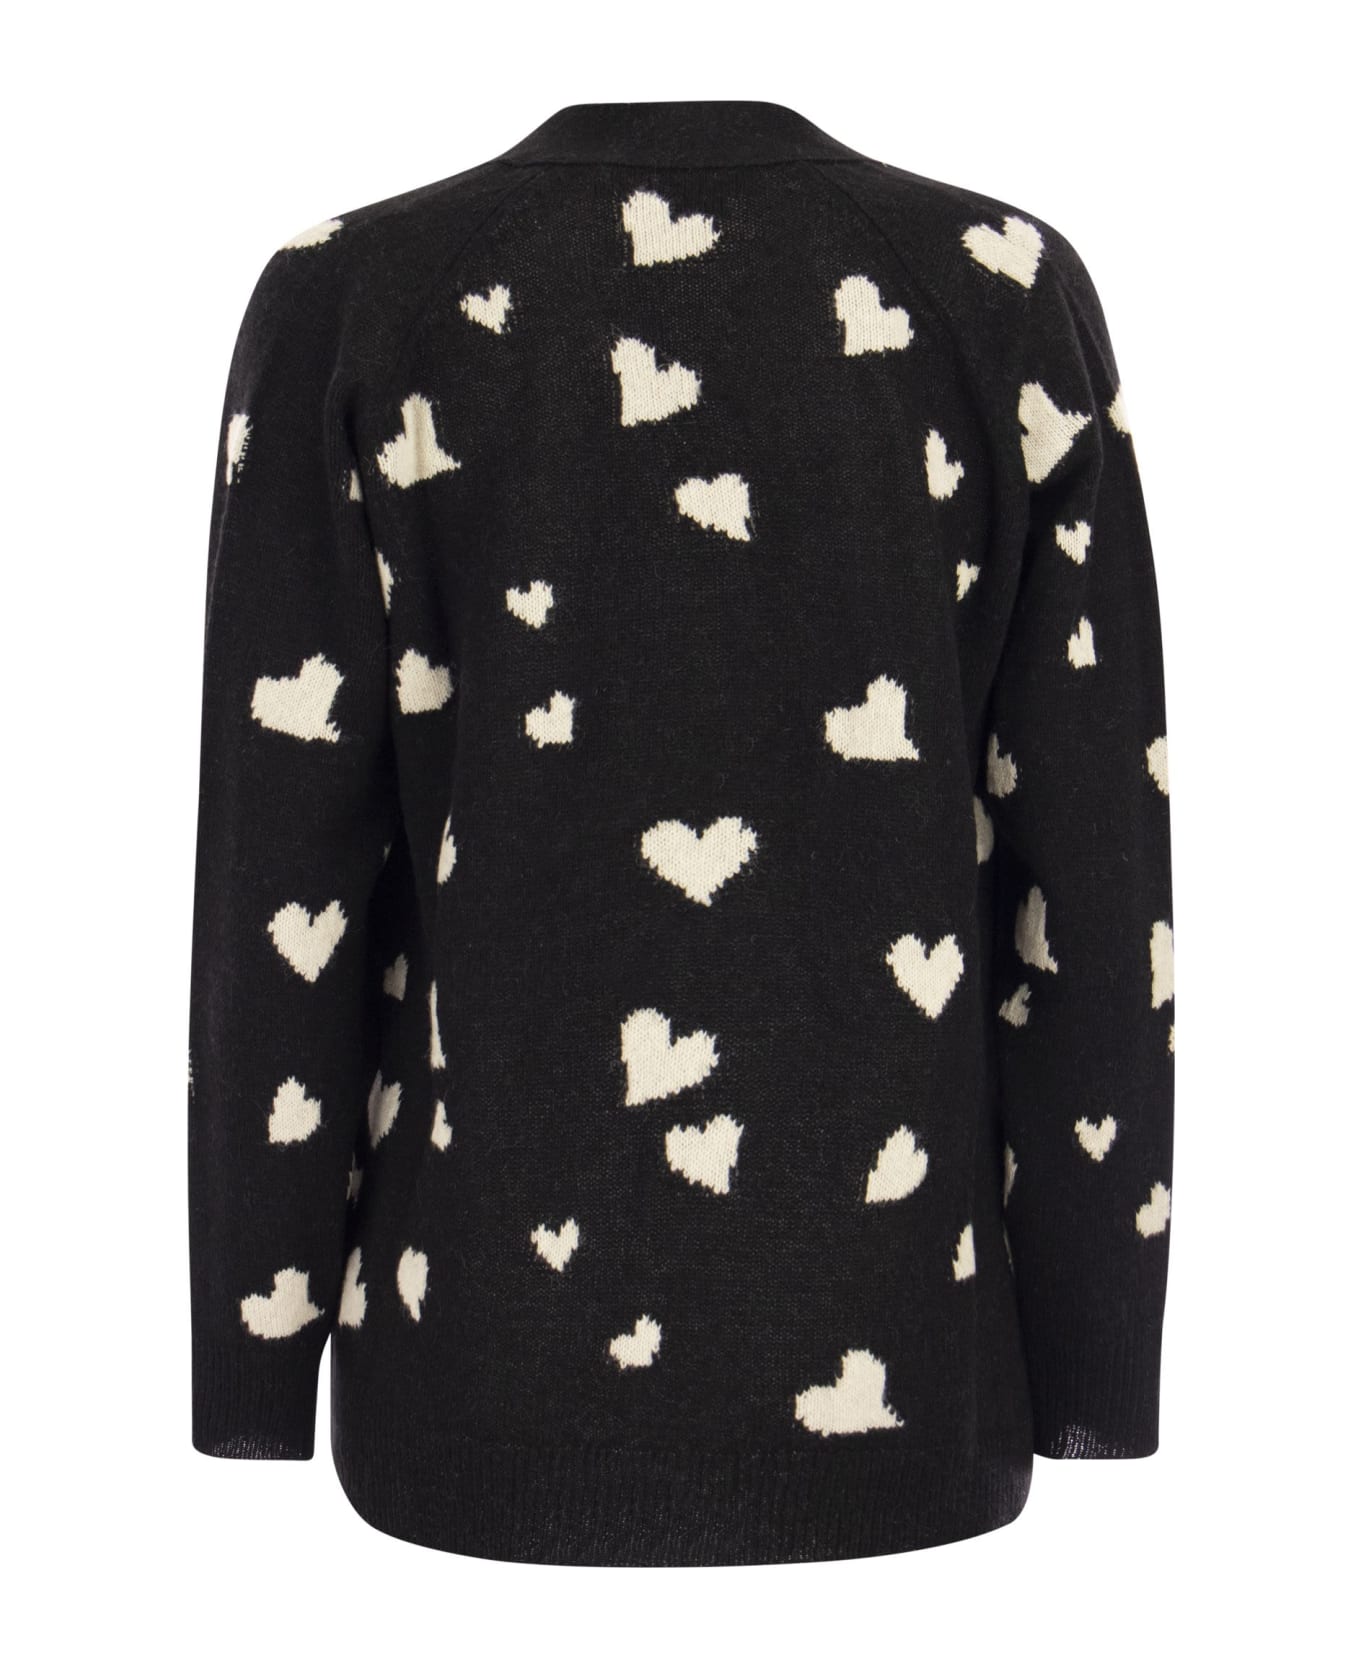 Marni Long Wool Cardigan With Bunch Of Hearts Motif - Black